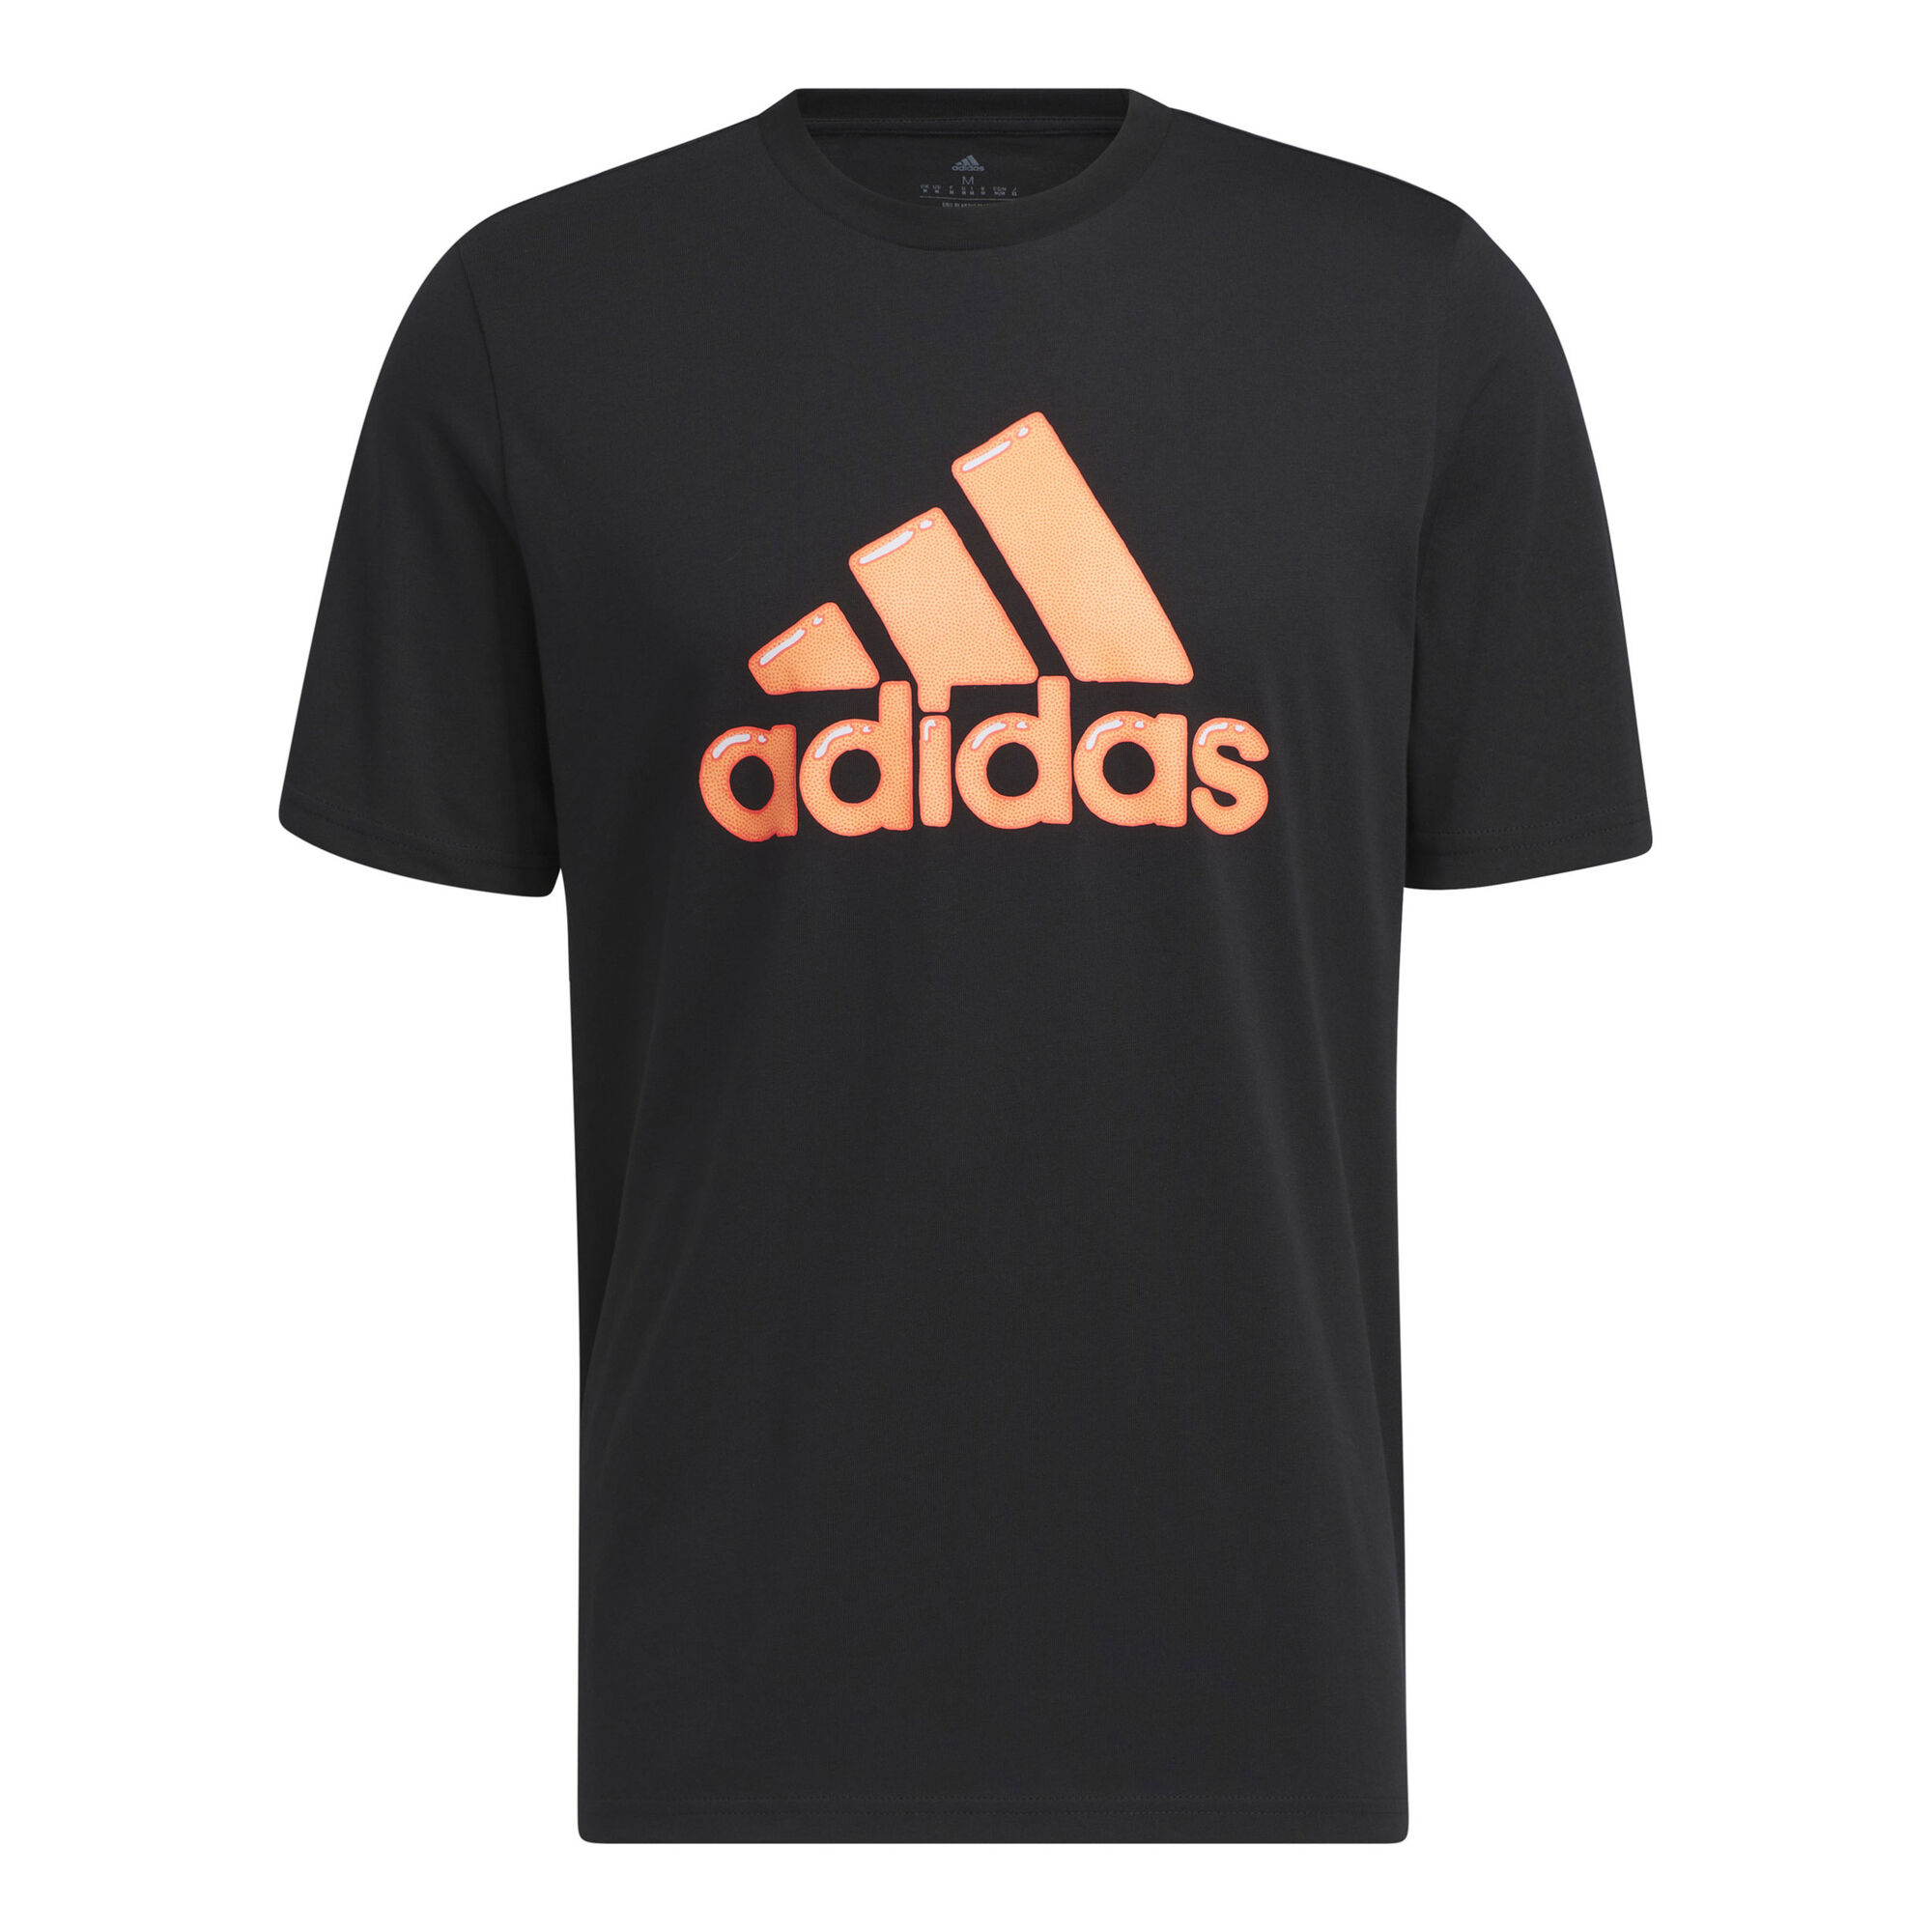 black and orange adidas shirt